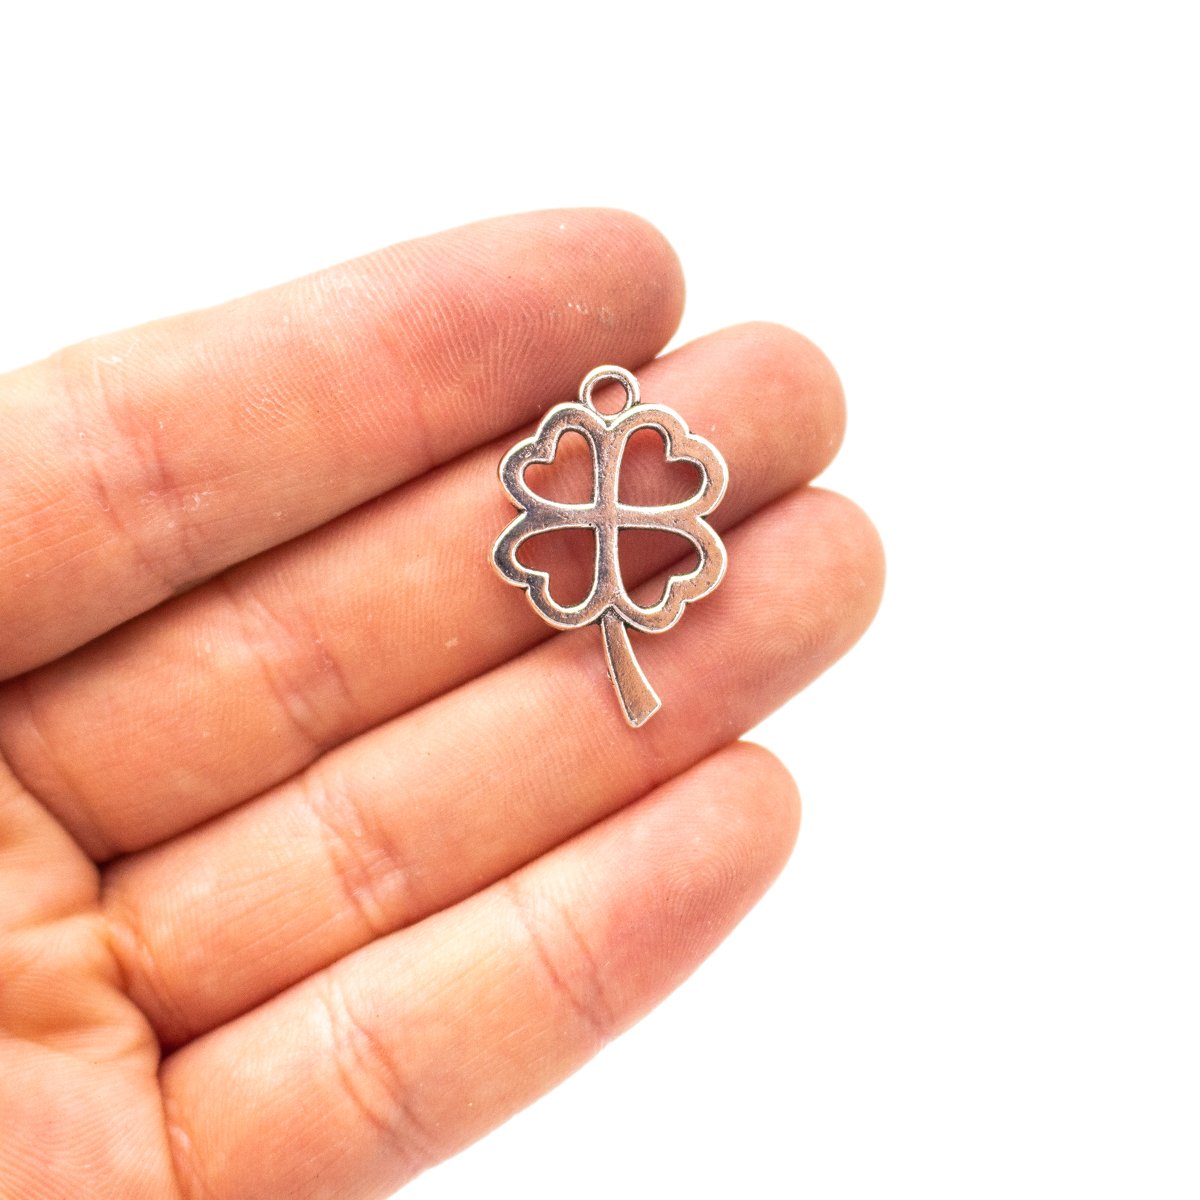 10Pcs Antique Four-leaf flower pendant for bracelet jewelry supplies jewelry finding D-3-439